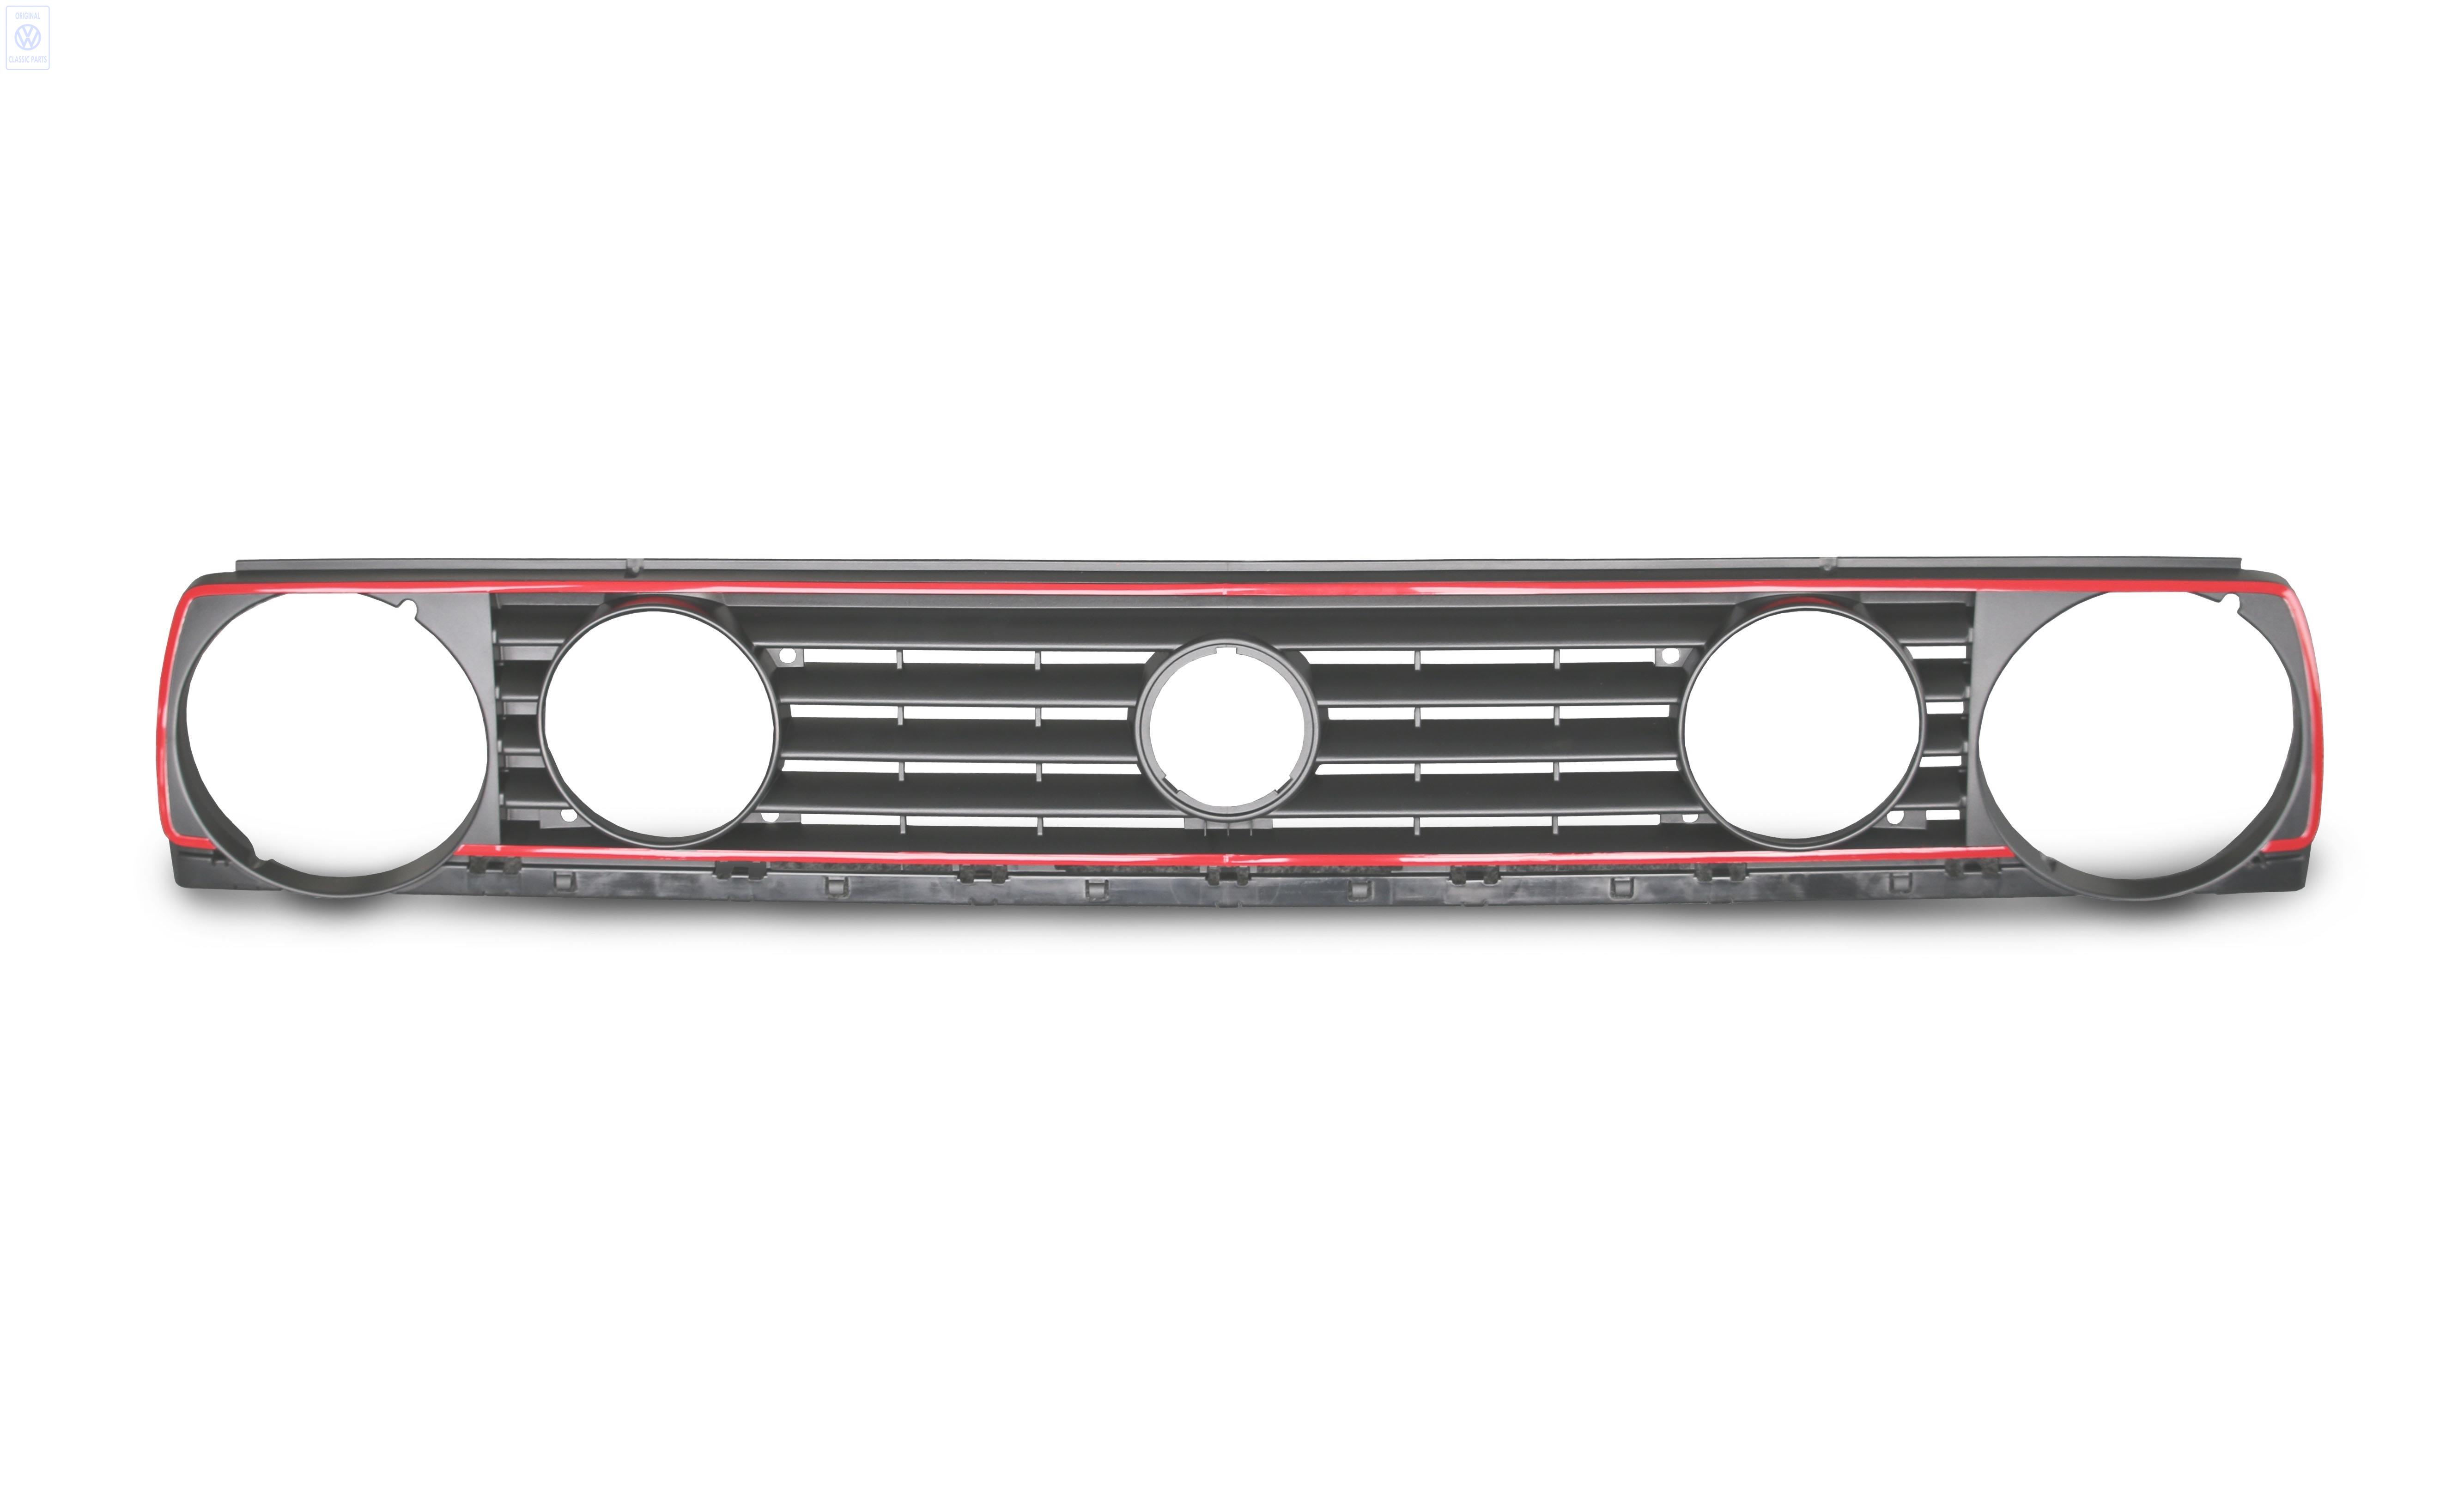 Radiator grille for VW Golf Mk2 GTI